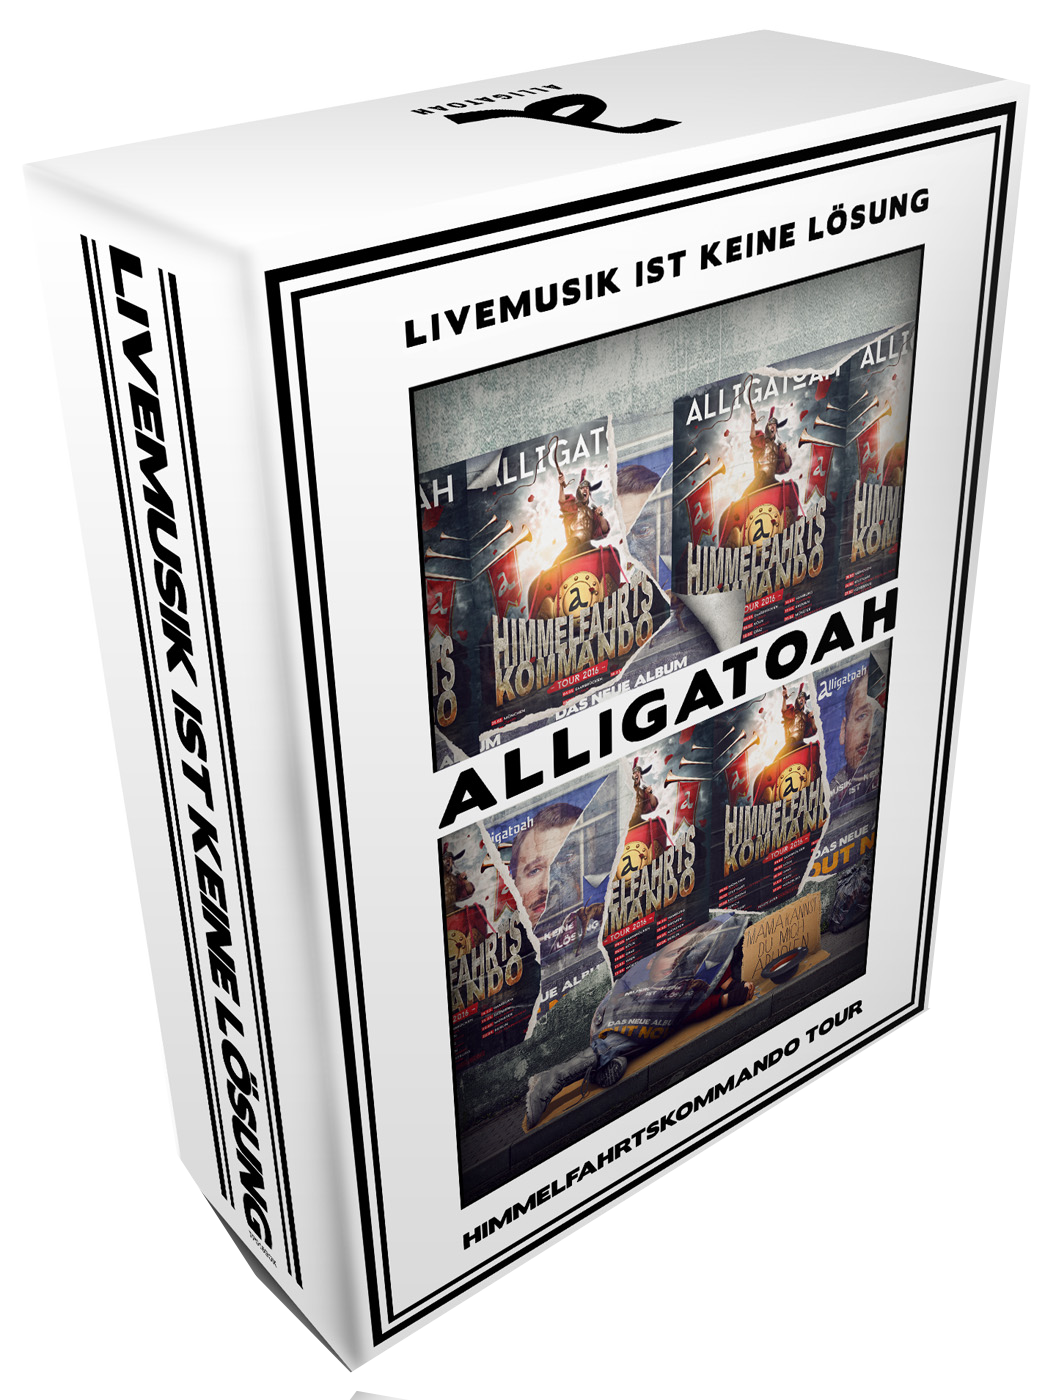 (CD Livemusik (3CD+DVD+T-Shirt) Tour Video) - Ist Lösung + Fanbox) - (Ltd. Alligatoah - Himmelfahrtskommando Keine DVD Alligatoah -